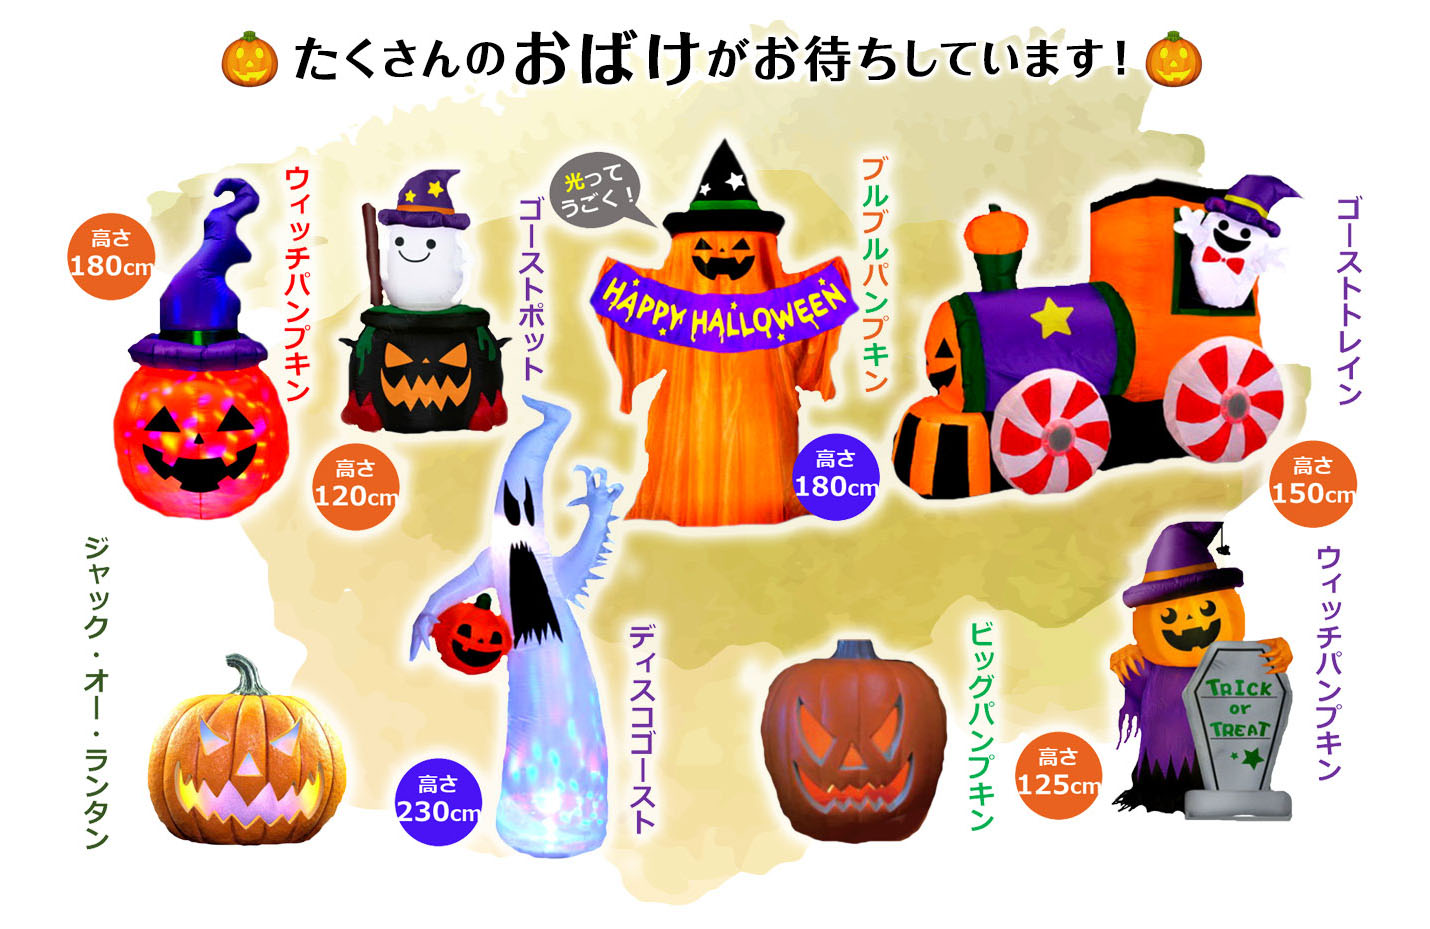 Halloween_image03.jpg